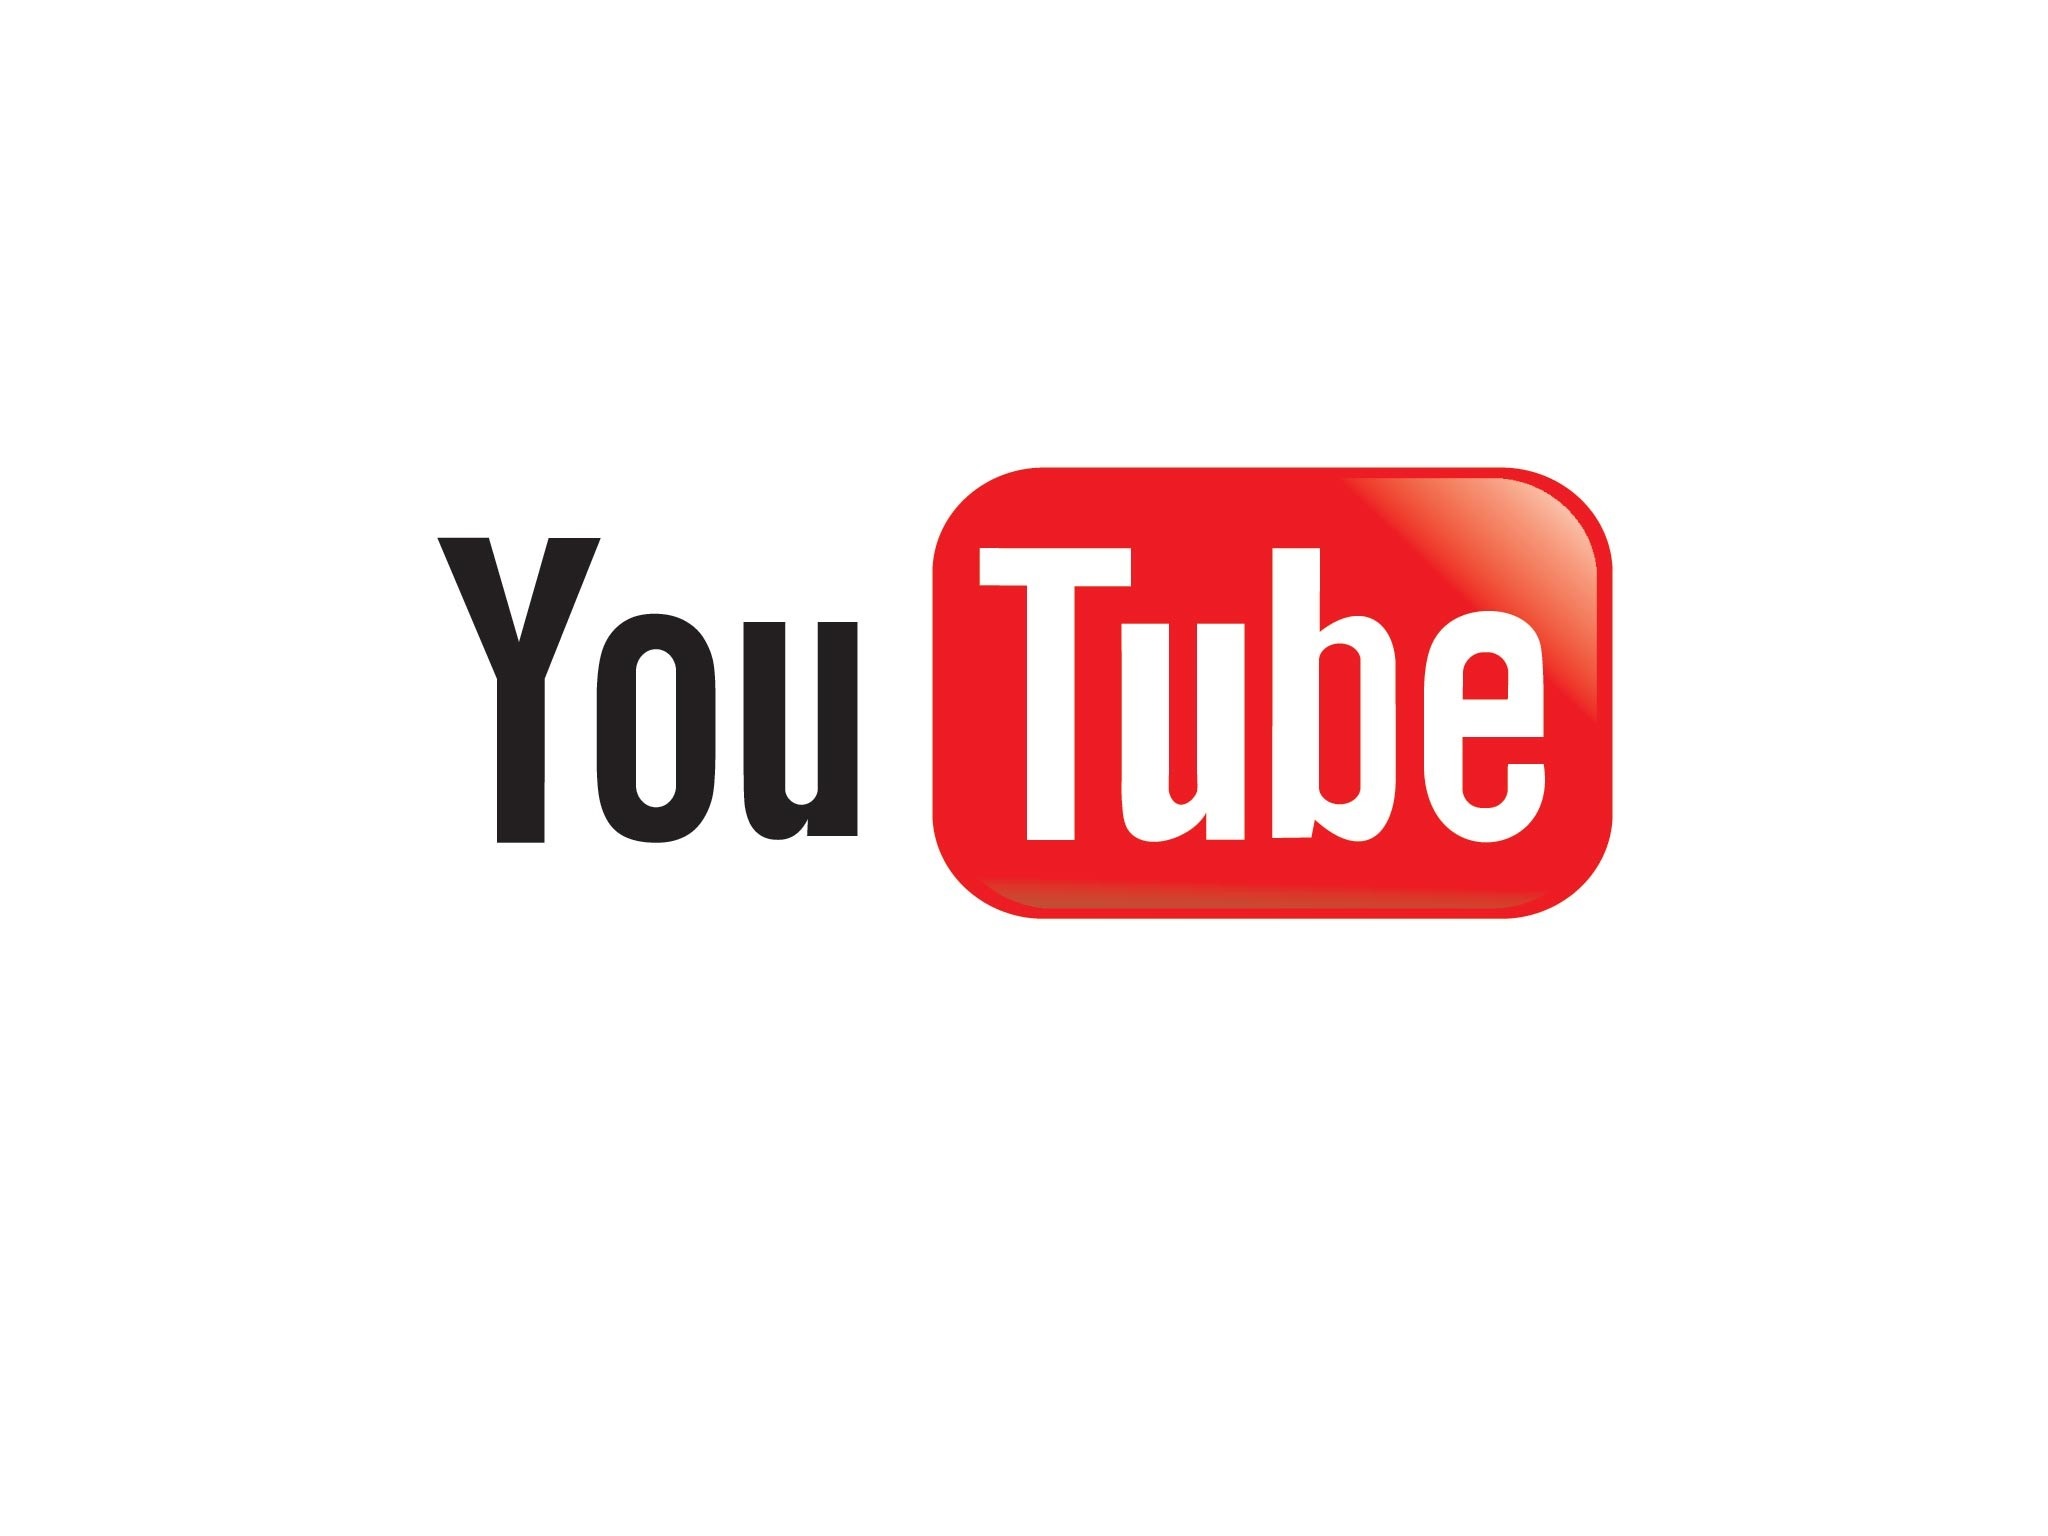 Введи youtube. Youtube ads. Рекламный лого ютуба. Youtube advertisement. Ads для ютуба.